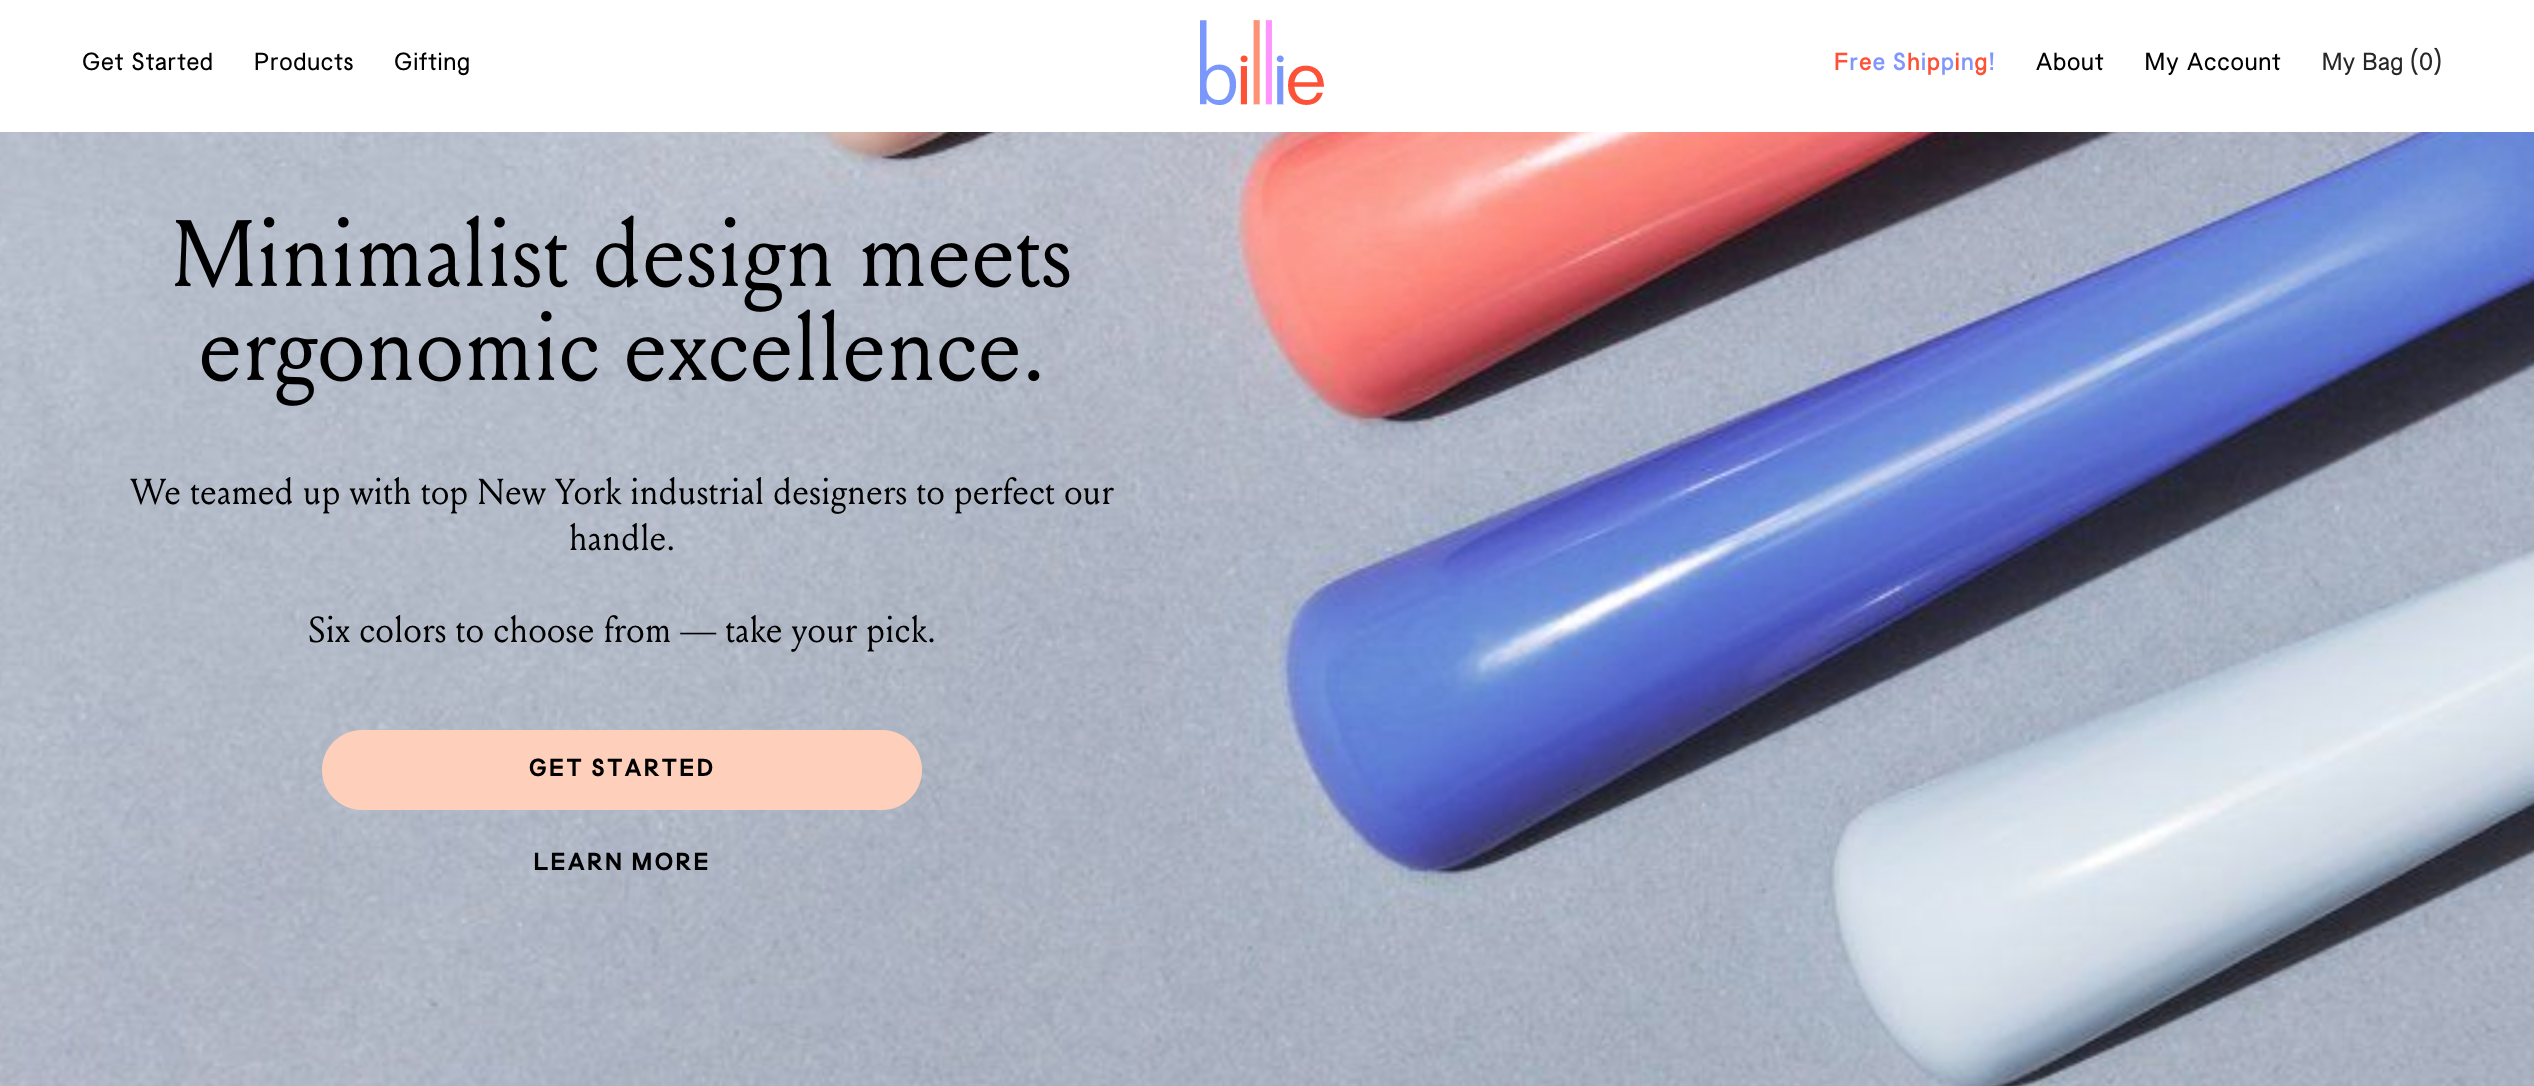 Billie razor minimalist design